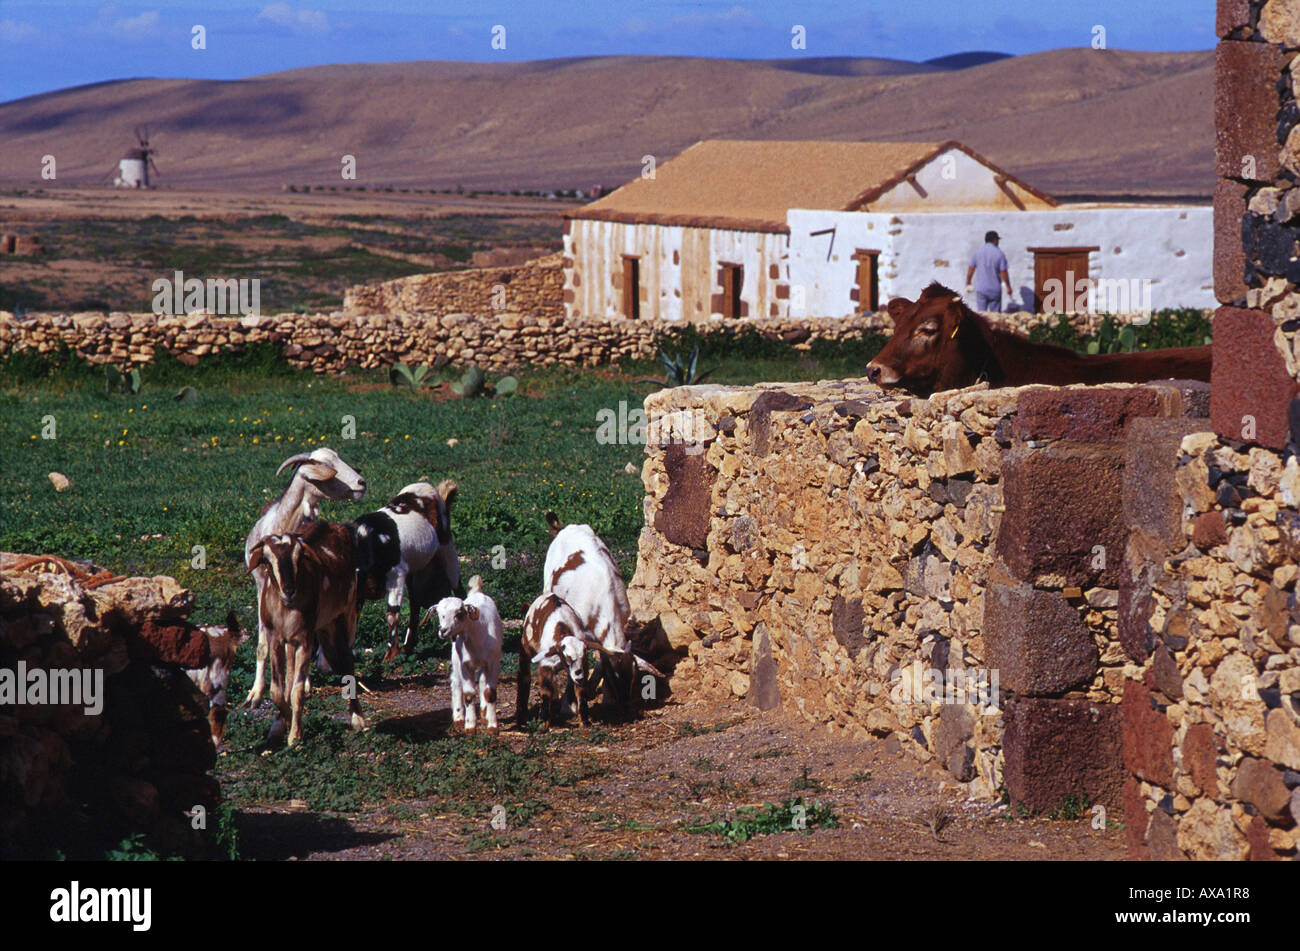 Ziegen, Museumsdorf, Tefia, Fuerteventura, Kanarische inseln Spanien, Europa Stock Photo